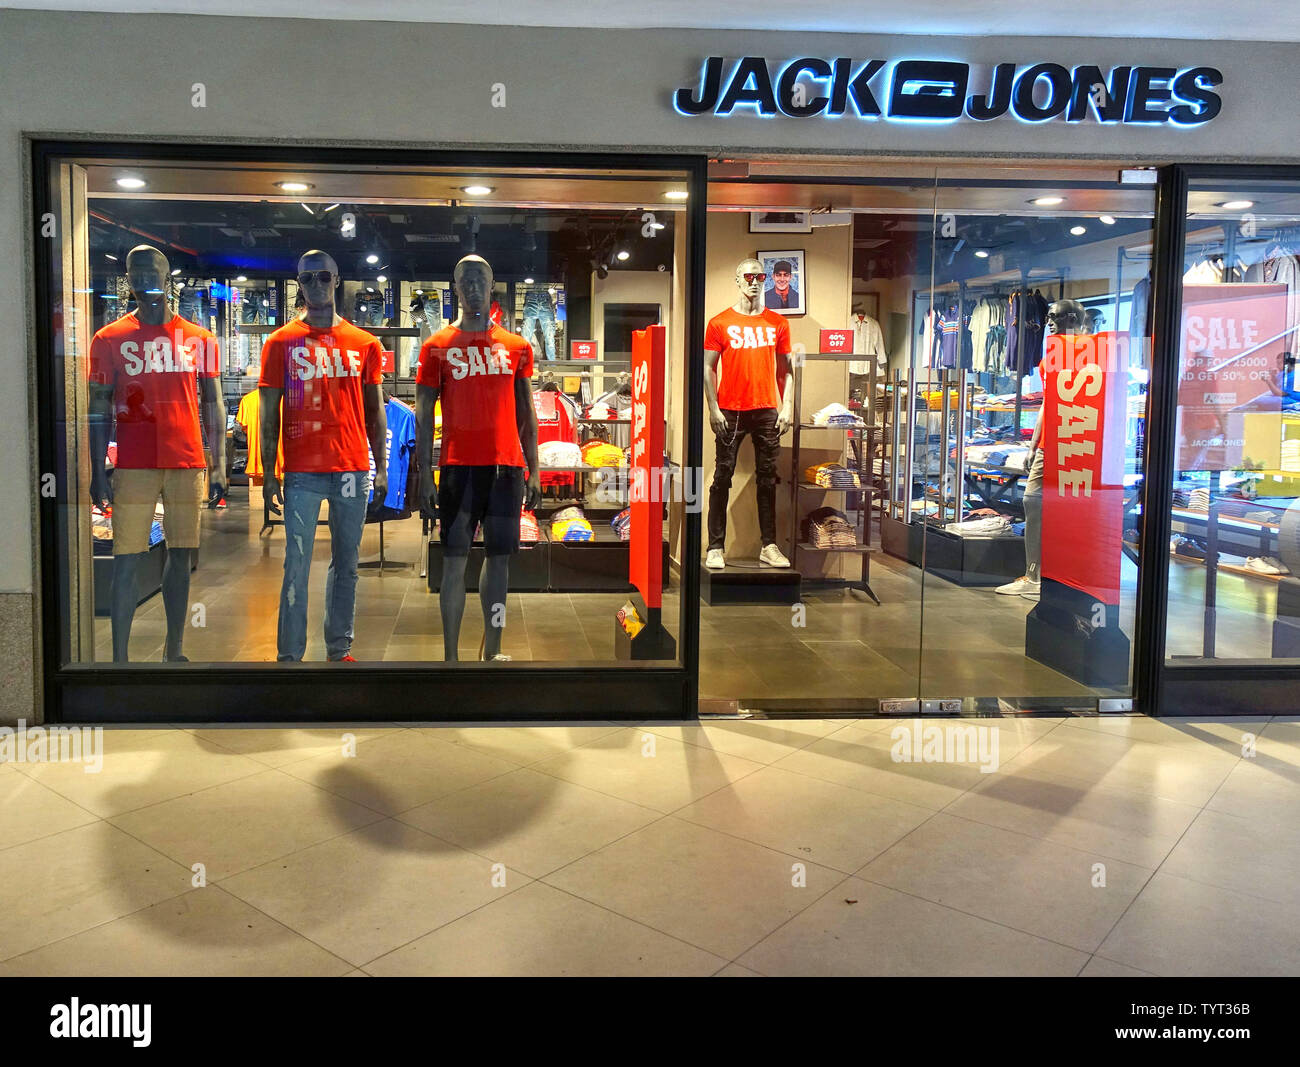 Jack & Jones  DLF Mall of India